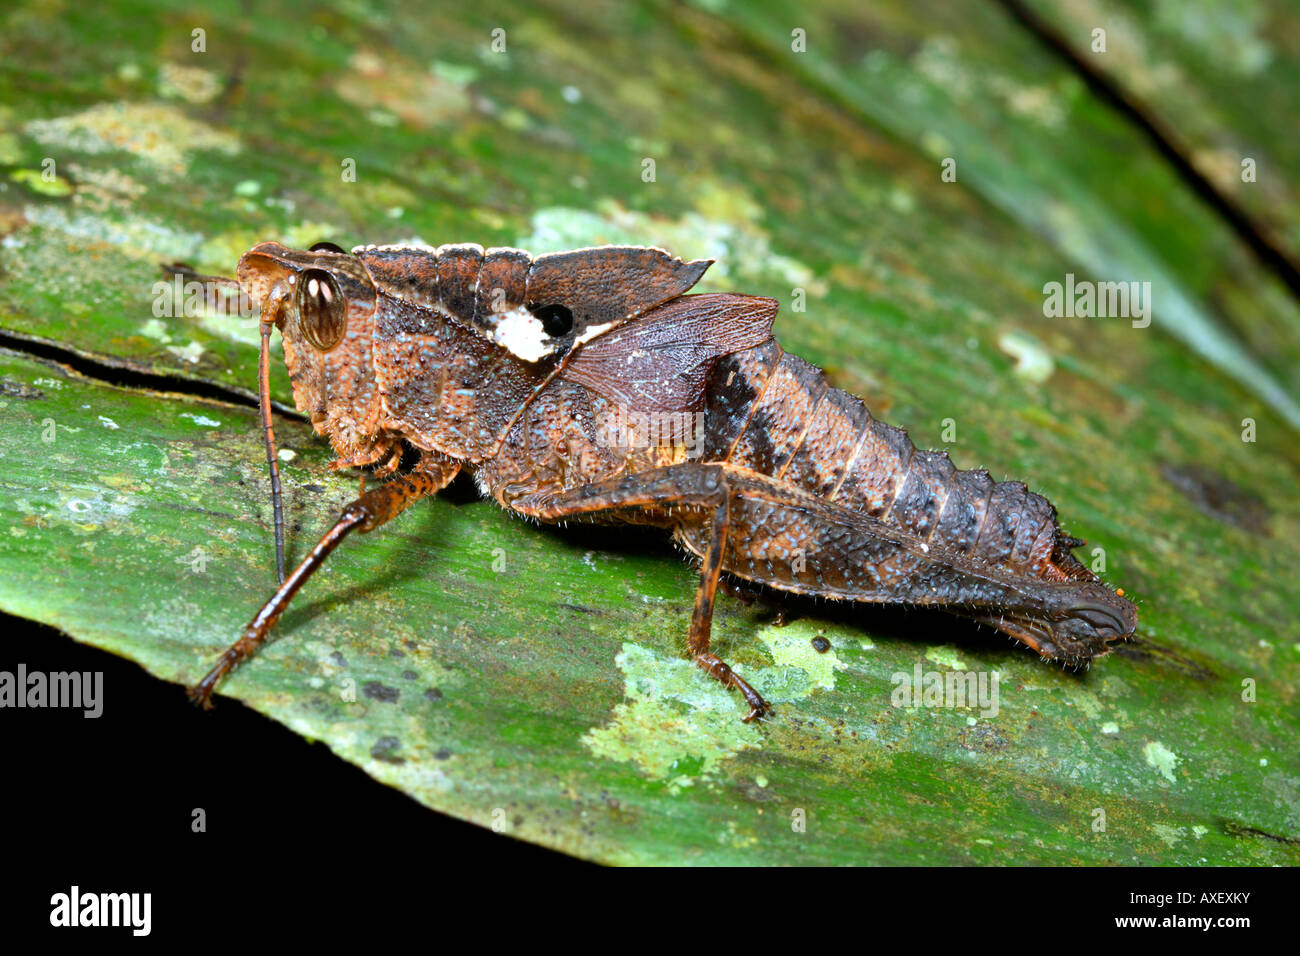 Grasshopper in the rainforest understory Stock Photo